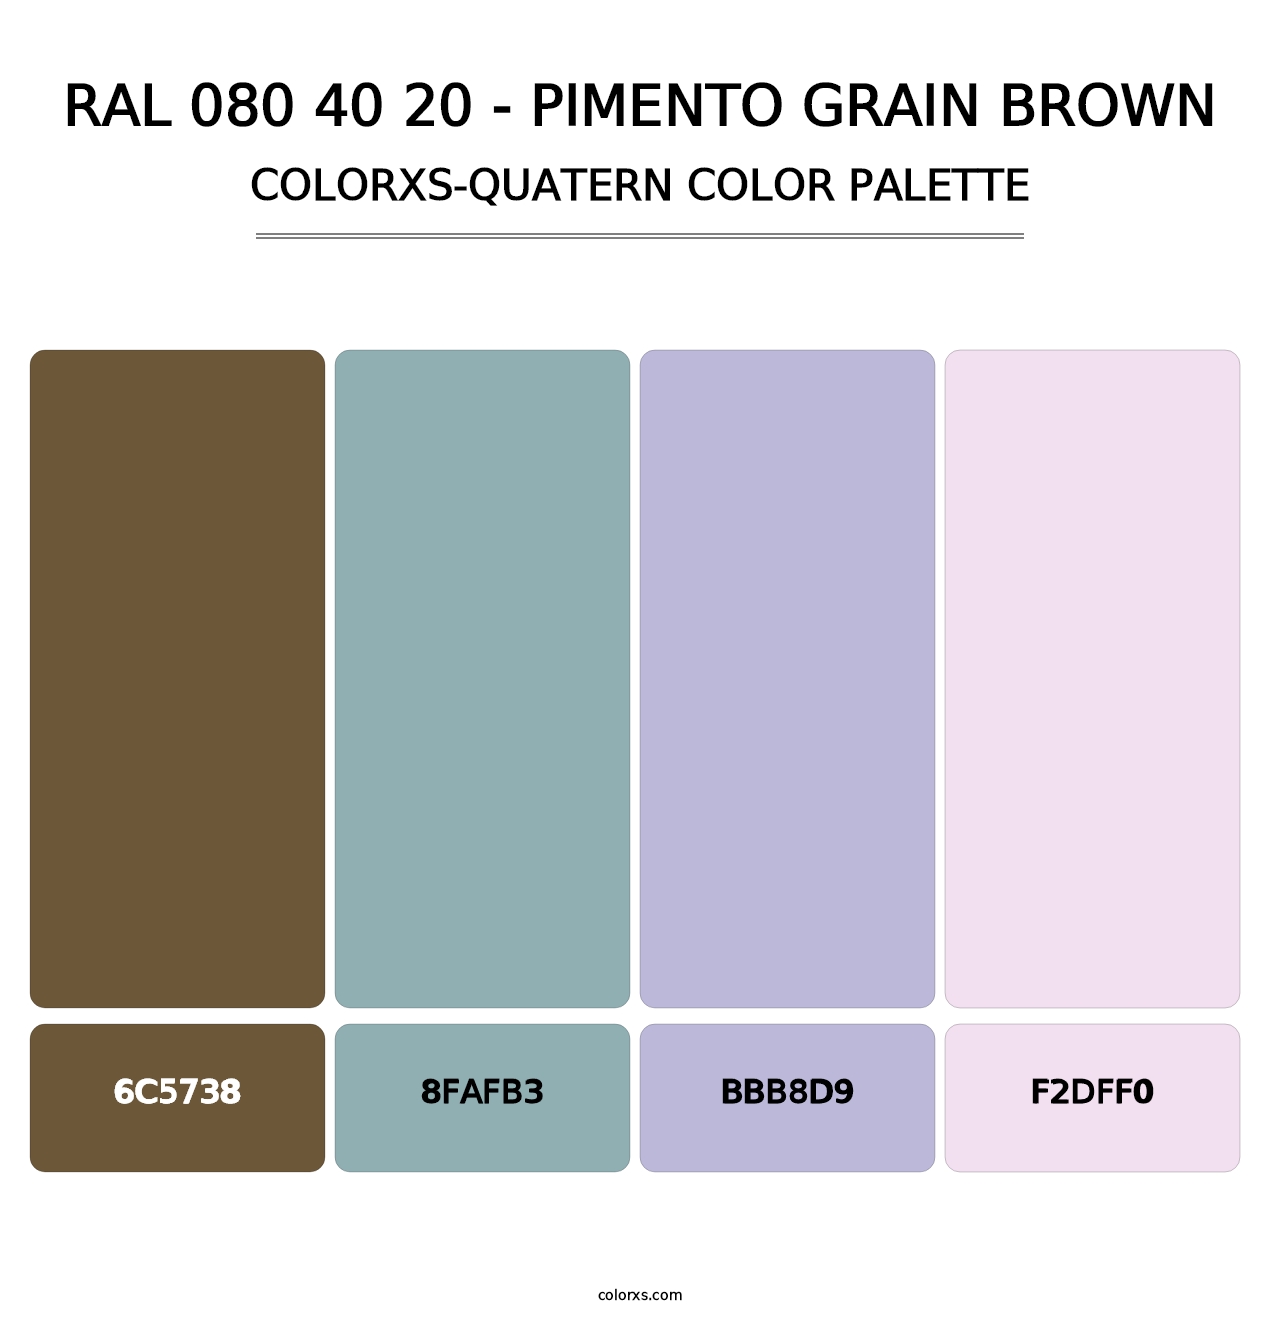 RAL 080 40 20 - Pimento Grain Brown - Colorxs Quatern Palette